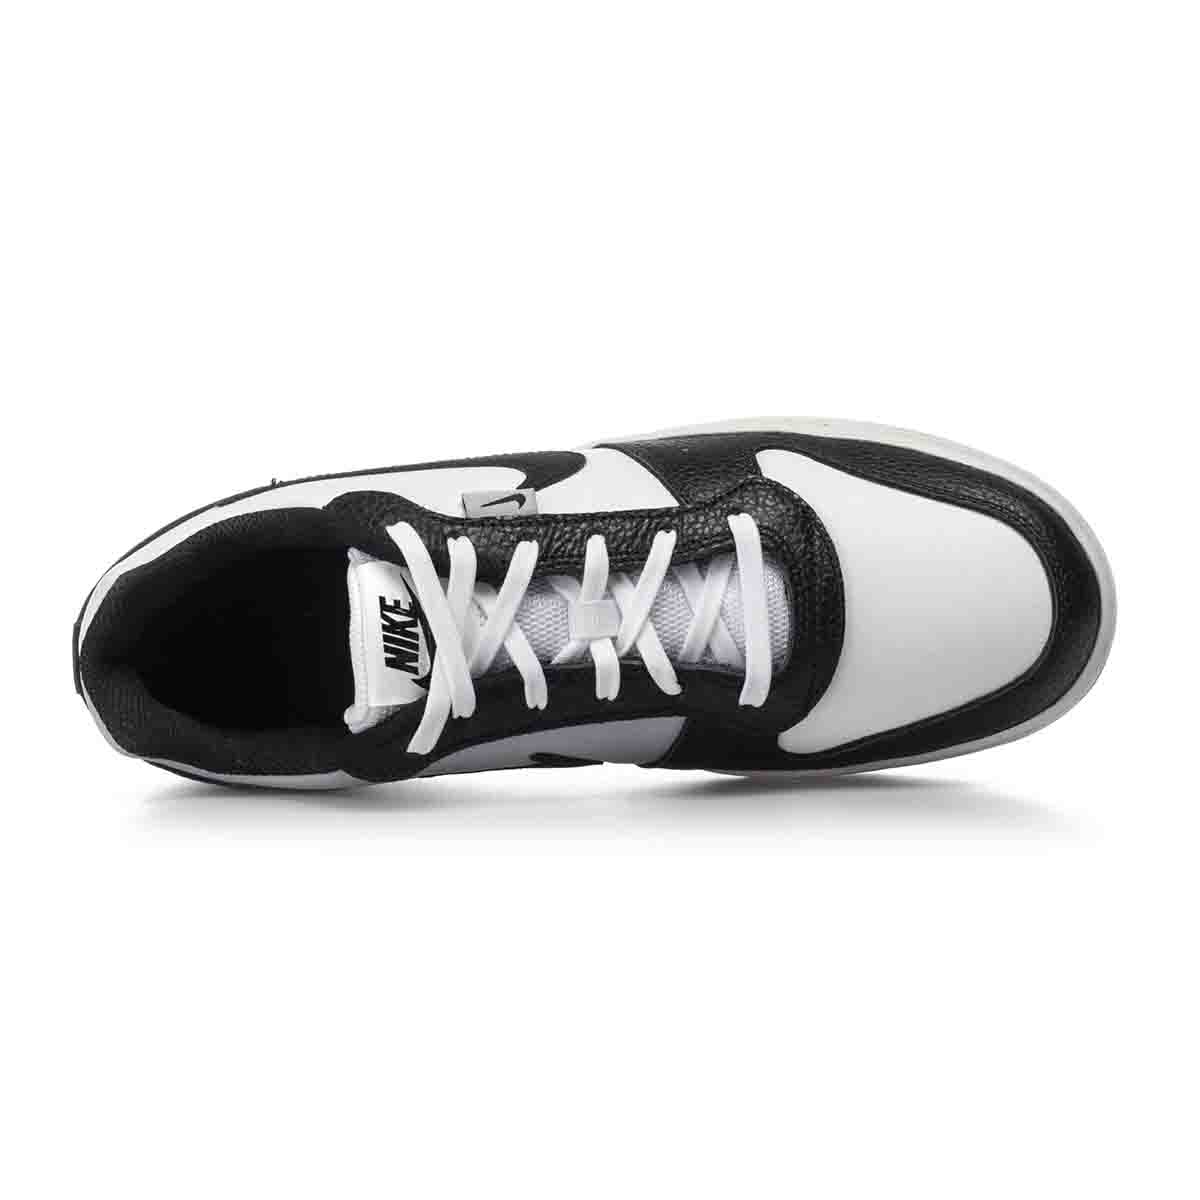 NIKE WMNS EBERNON Low Sneakers Size 11.5 $35.99 - PicClick